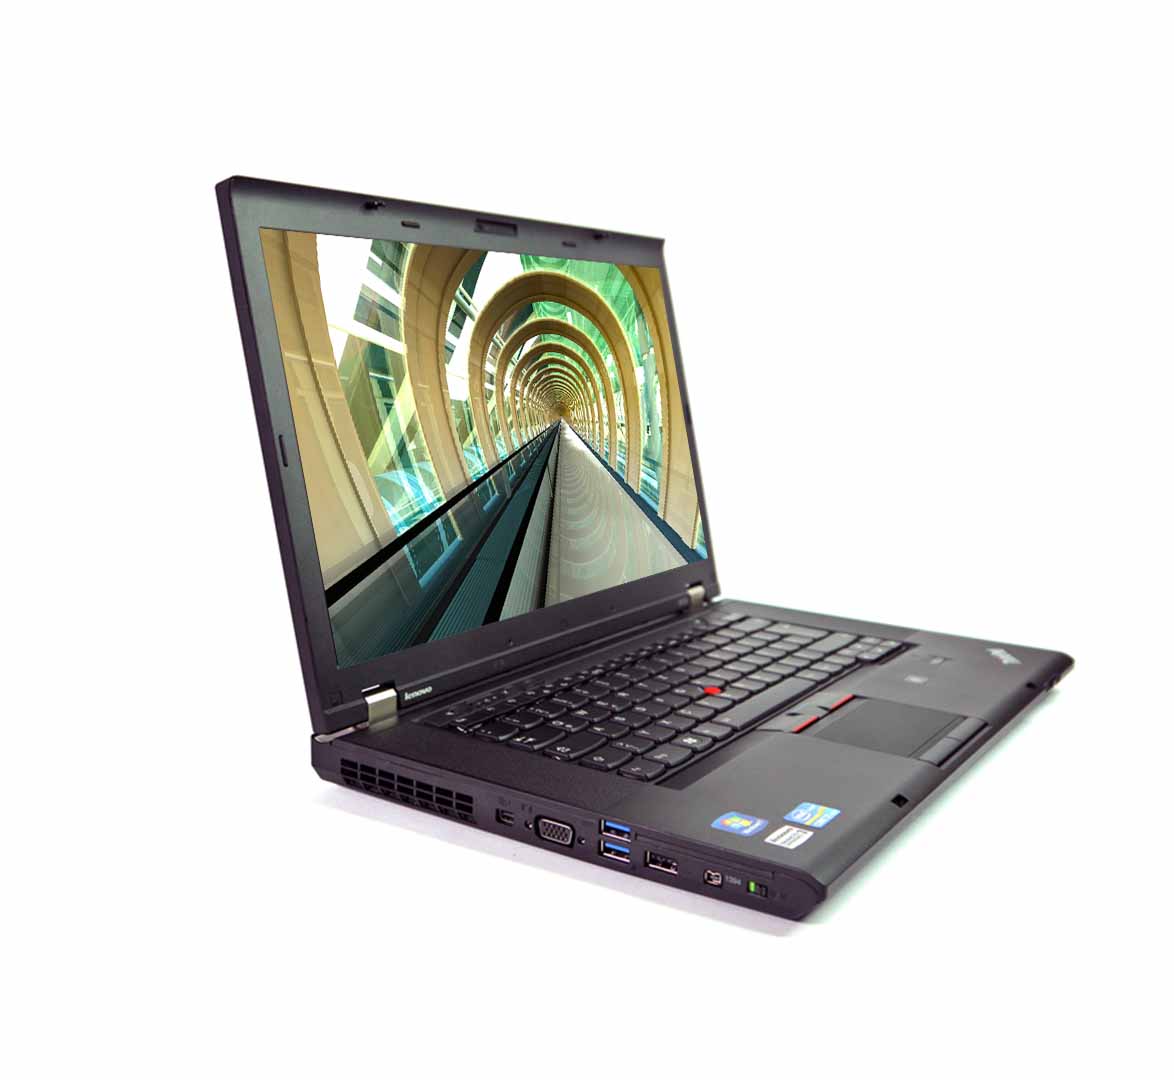 Lenovo W530 Business Laptop, Intel Core i7-3rd Gen CPU, 16GB RAM, 512GB SSD, Nvidia Quadro 1000M Graphics, 15 inch Display, Win10